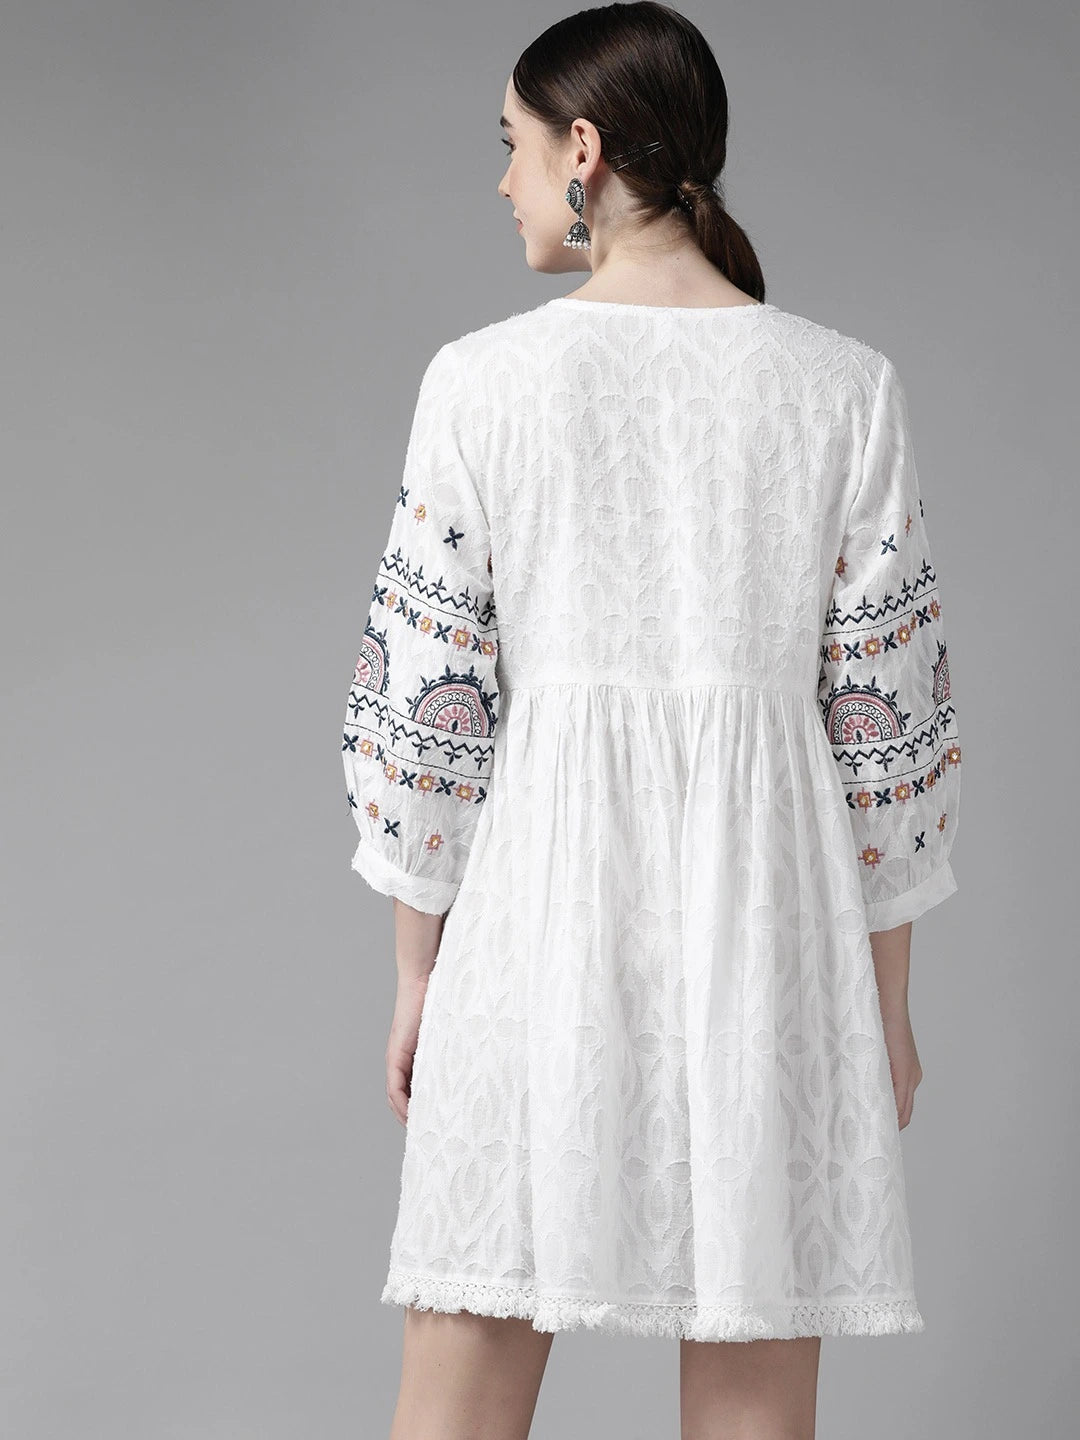 White A-Line Dress-Yufta Store-9821DRSWHS